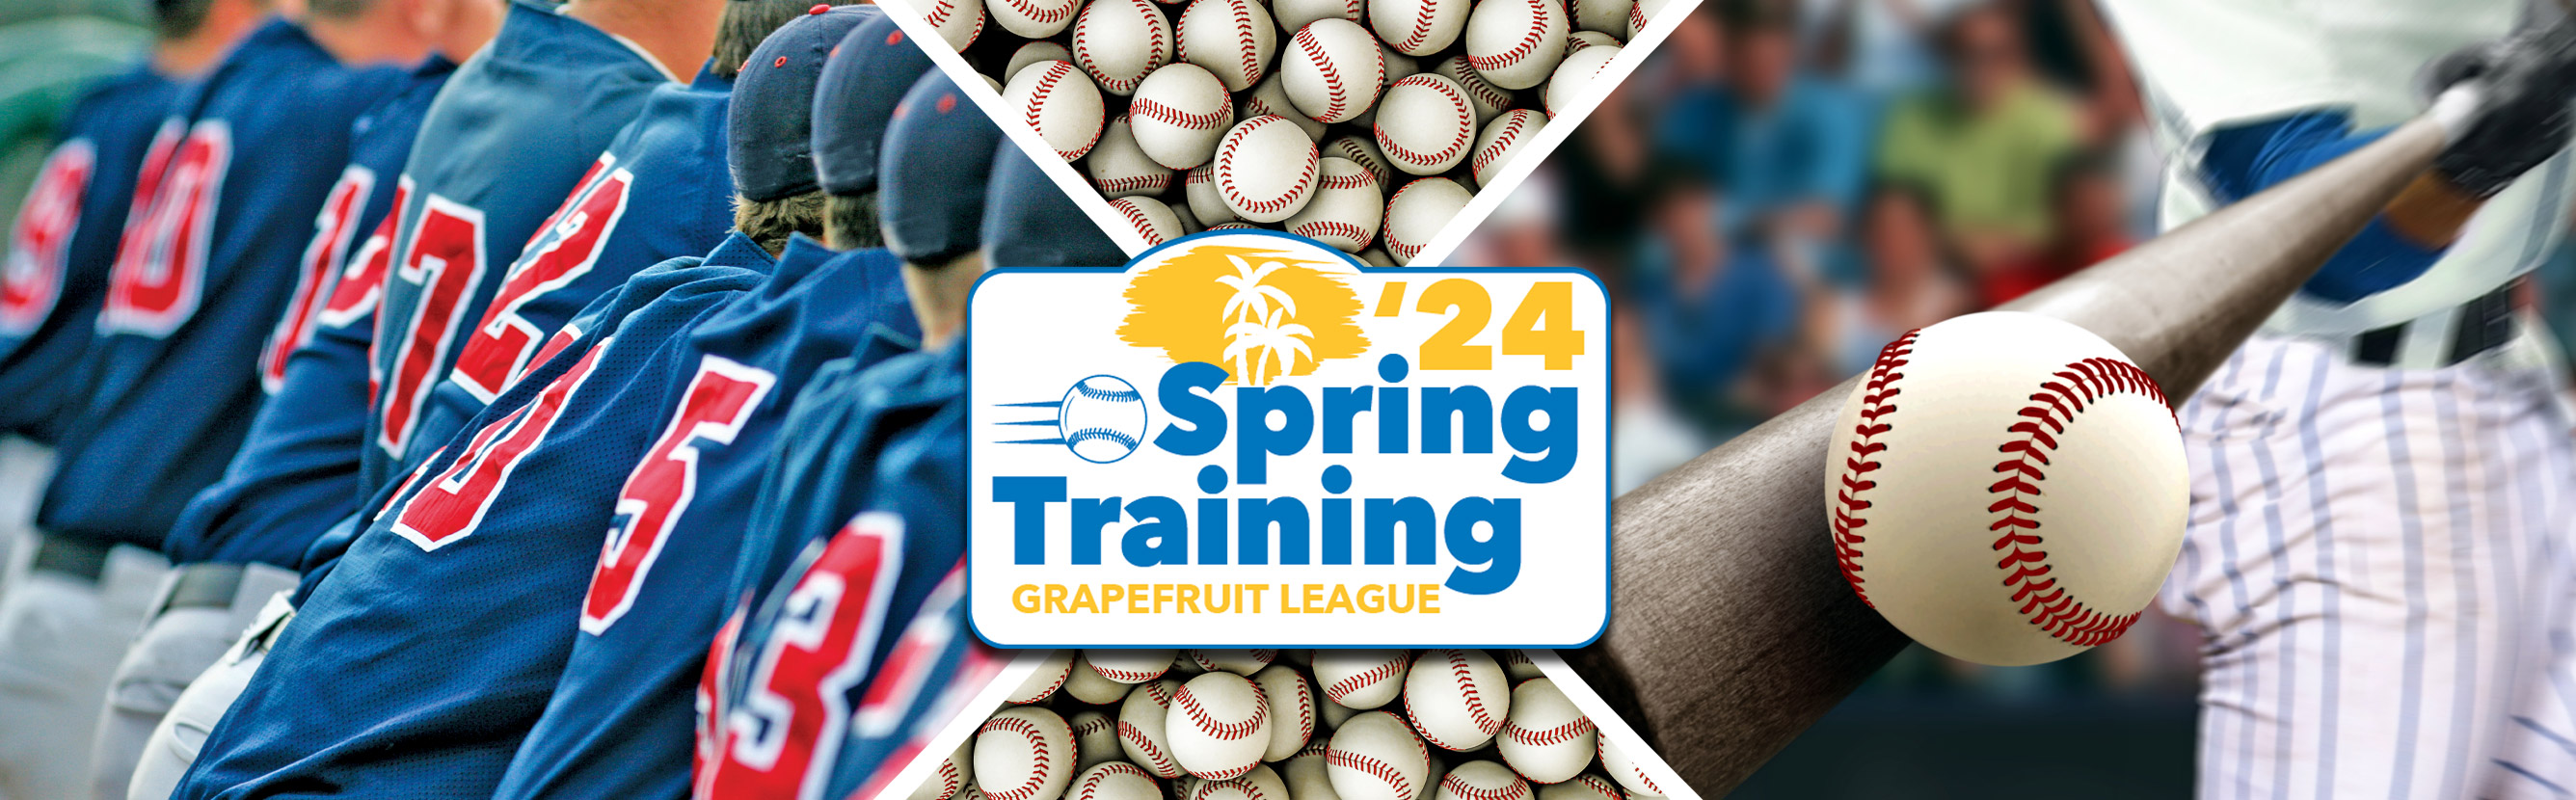 Spring Training Grapefruit League